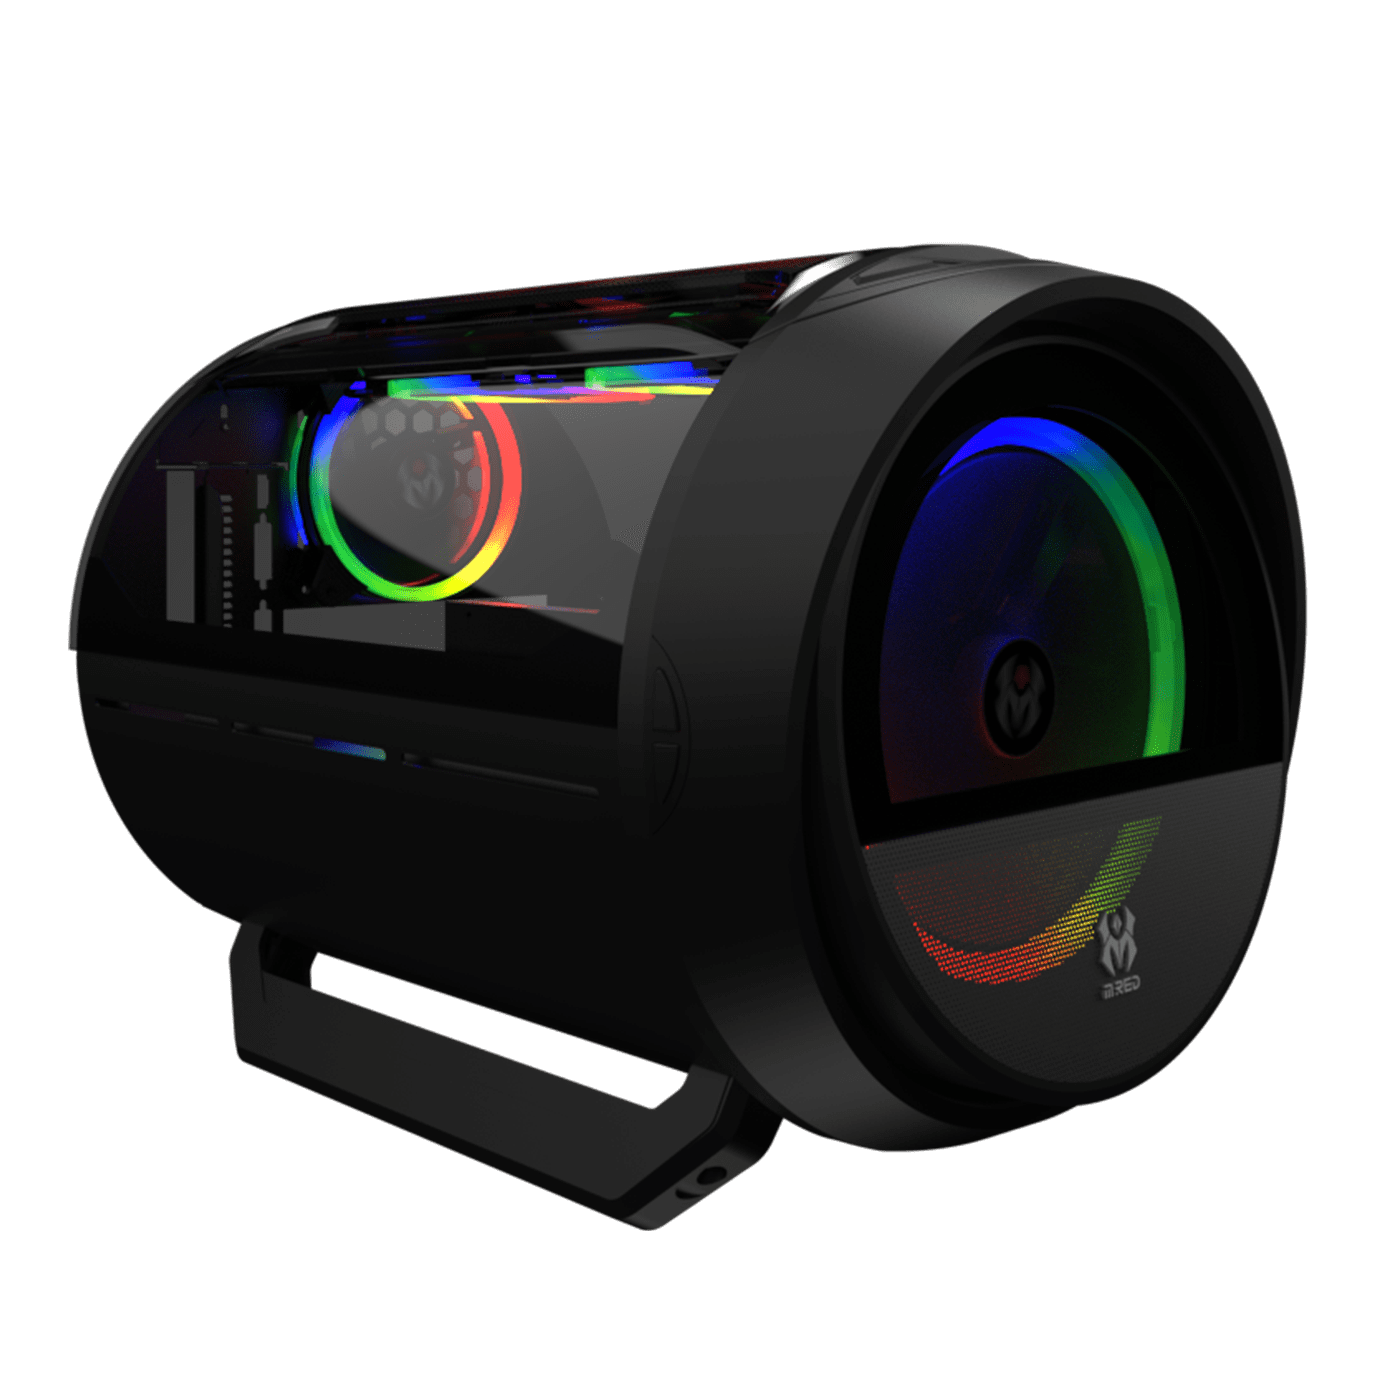 MRED - Boîtier PC Gamer ATX - Blanc RGB Crystal Sea - ADMI